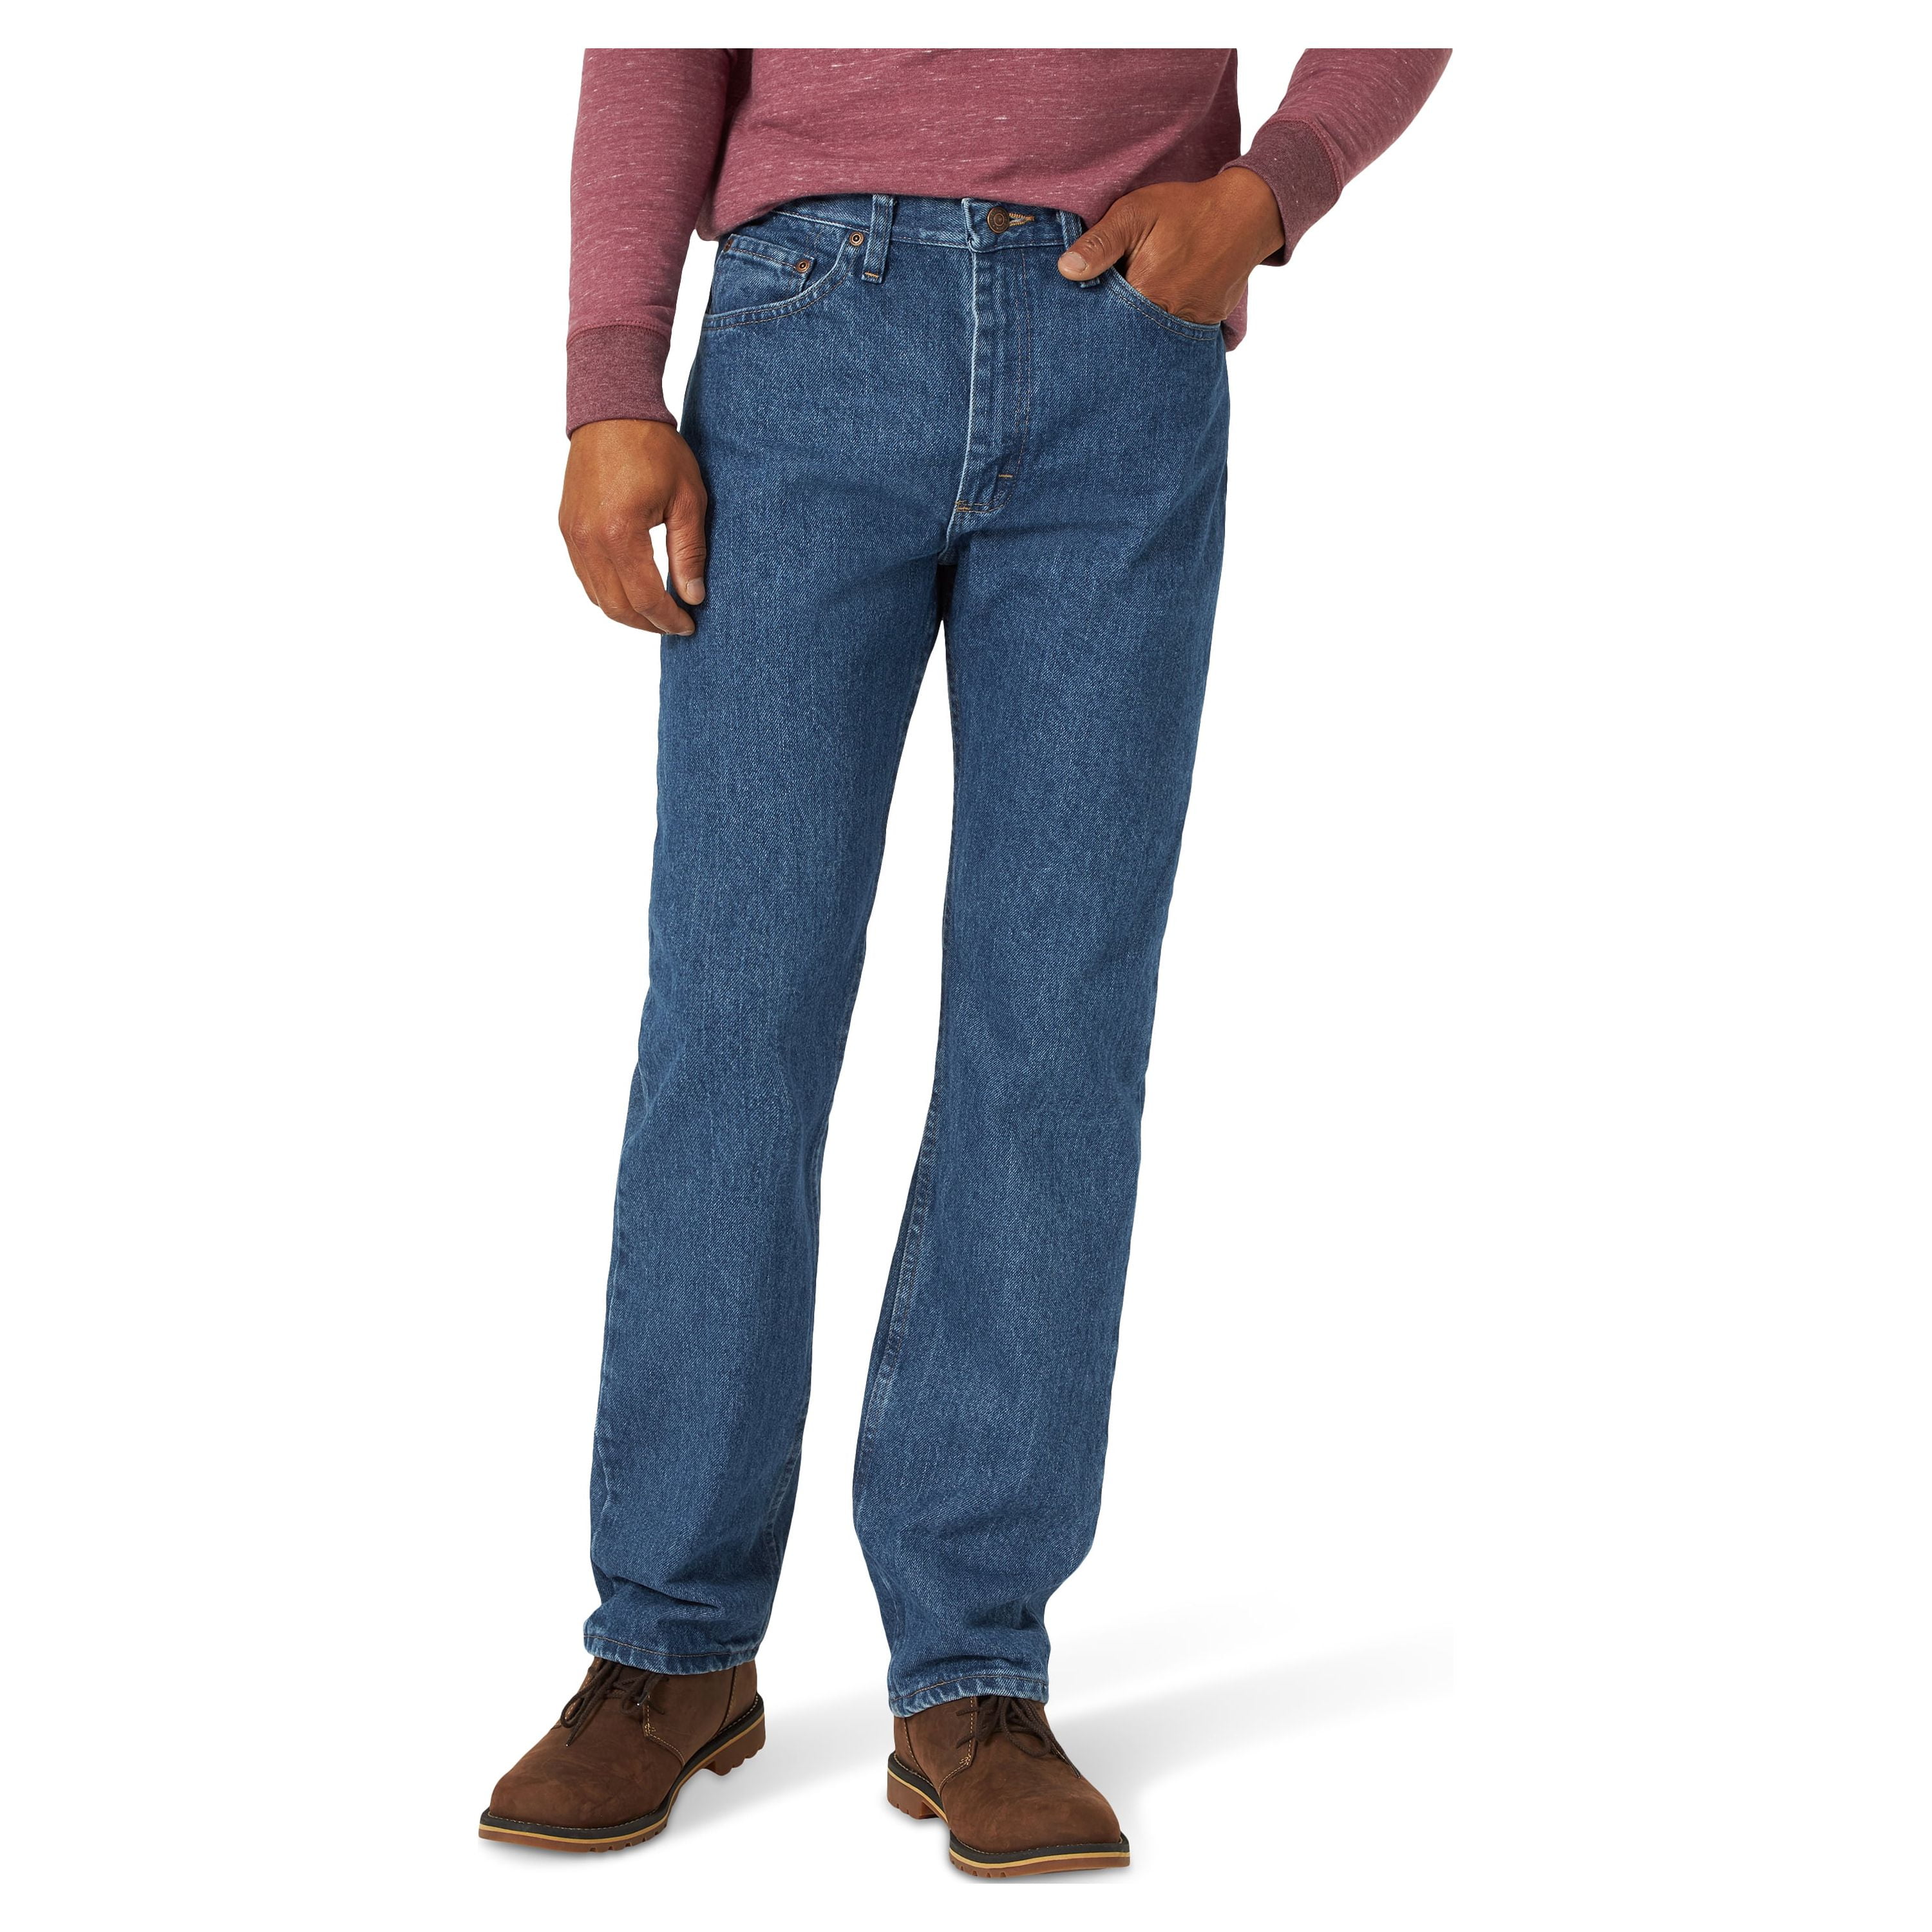 Reservere personificering permeabilitet Wrangler Men's and Big Men's Regular Fit Jeans - Walmart.com